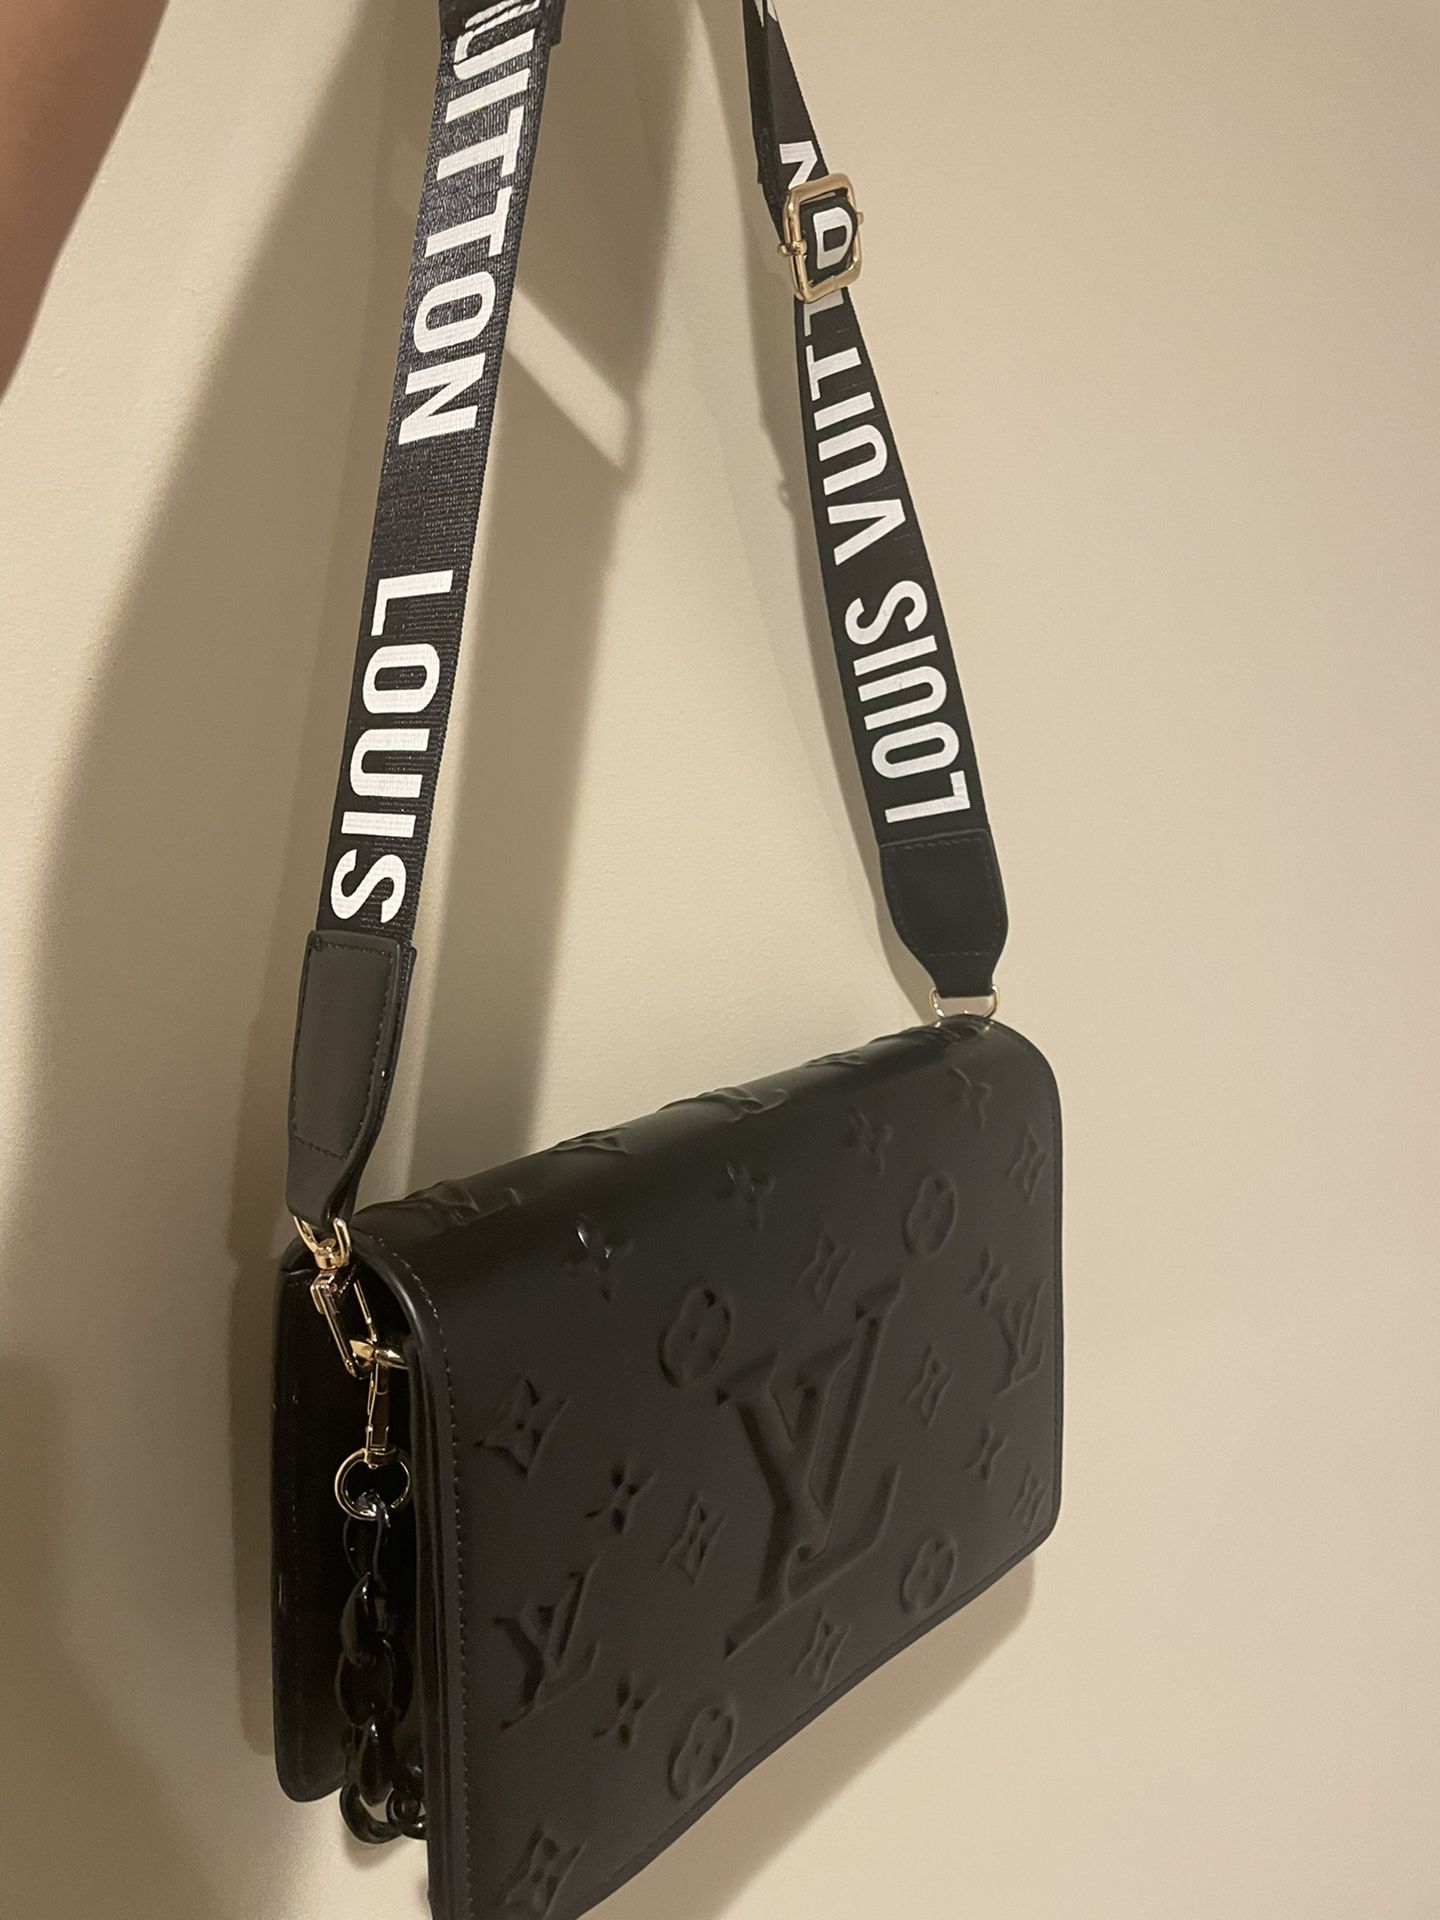  Black Louis Vuitton Bag 